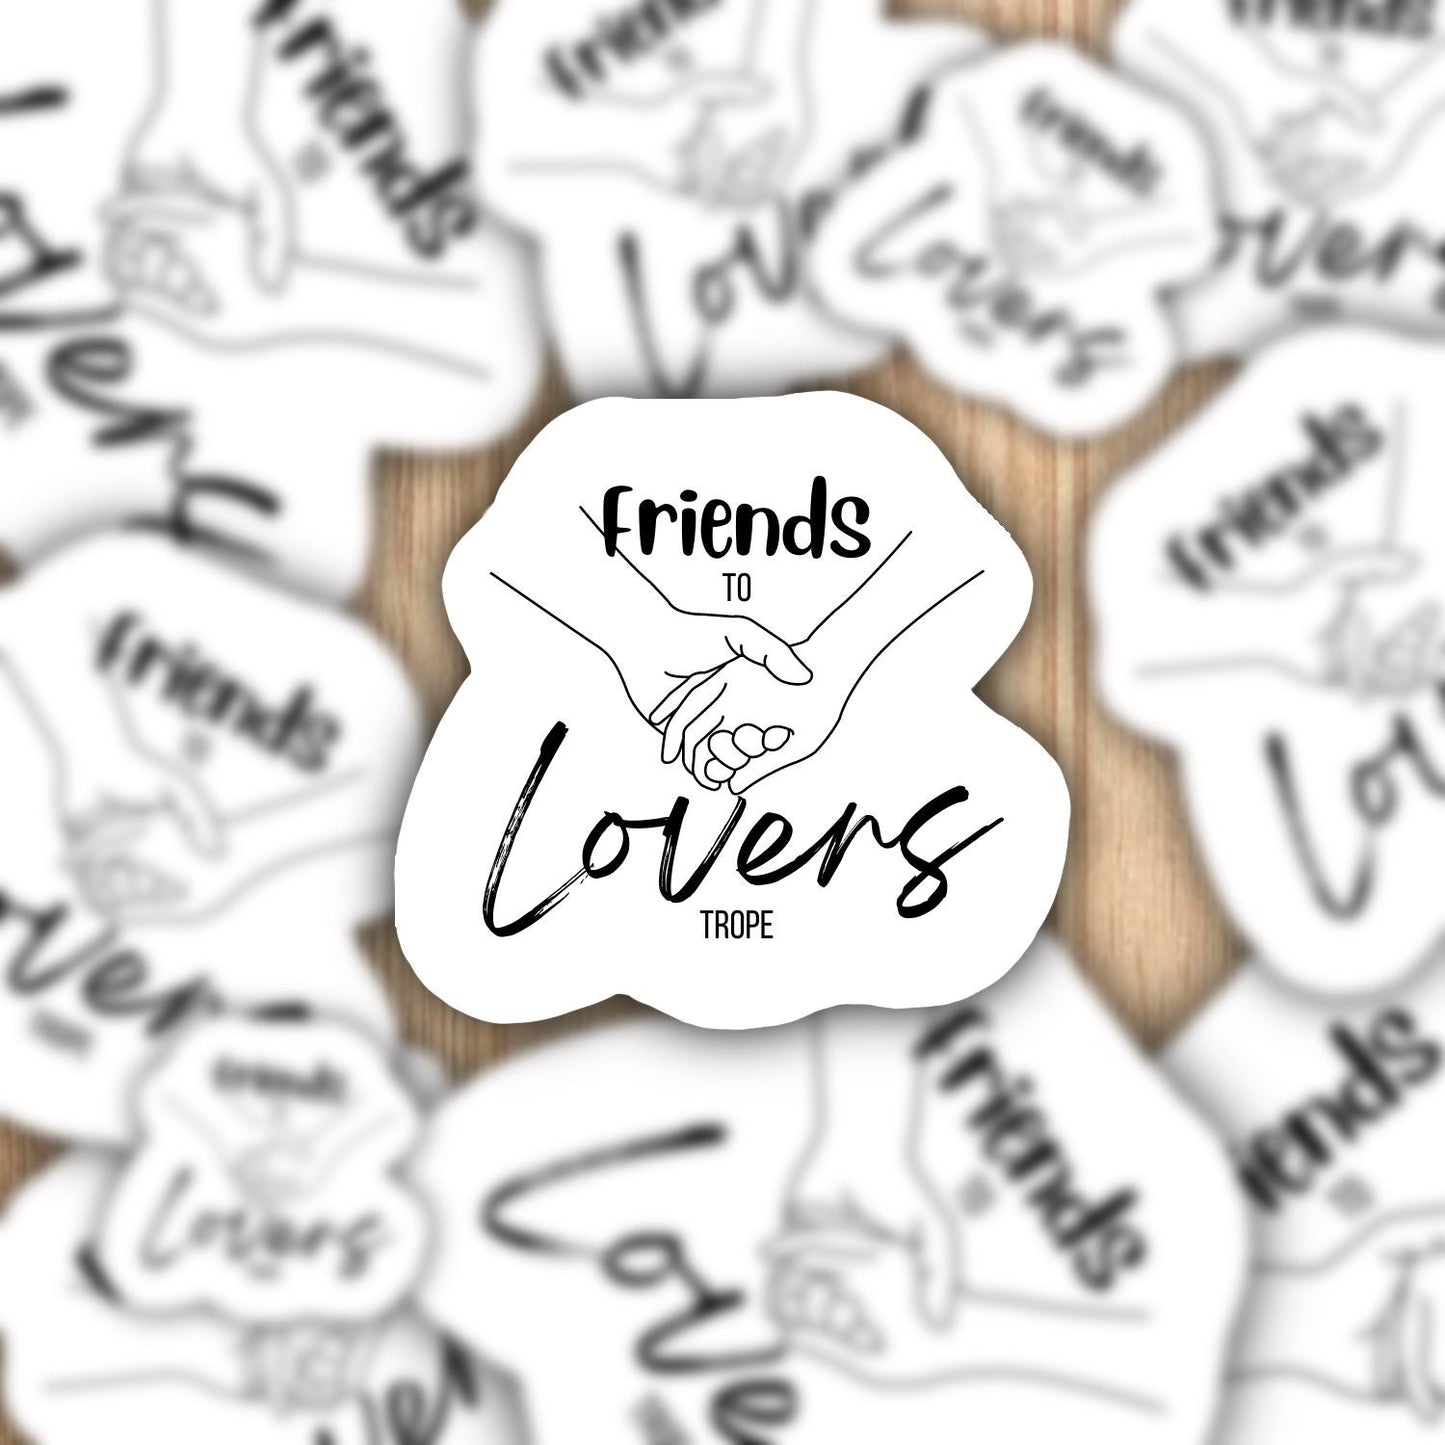 Friends to Lovers trope waterproof vinyl sticker, romance novels, booktok sticker, romance book lover